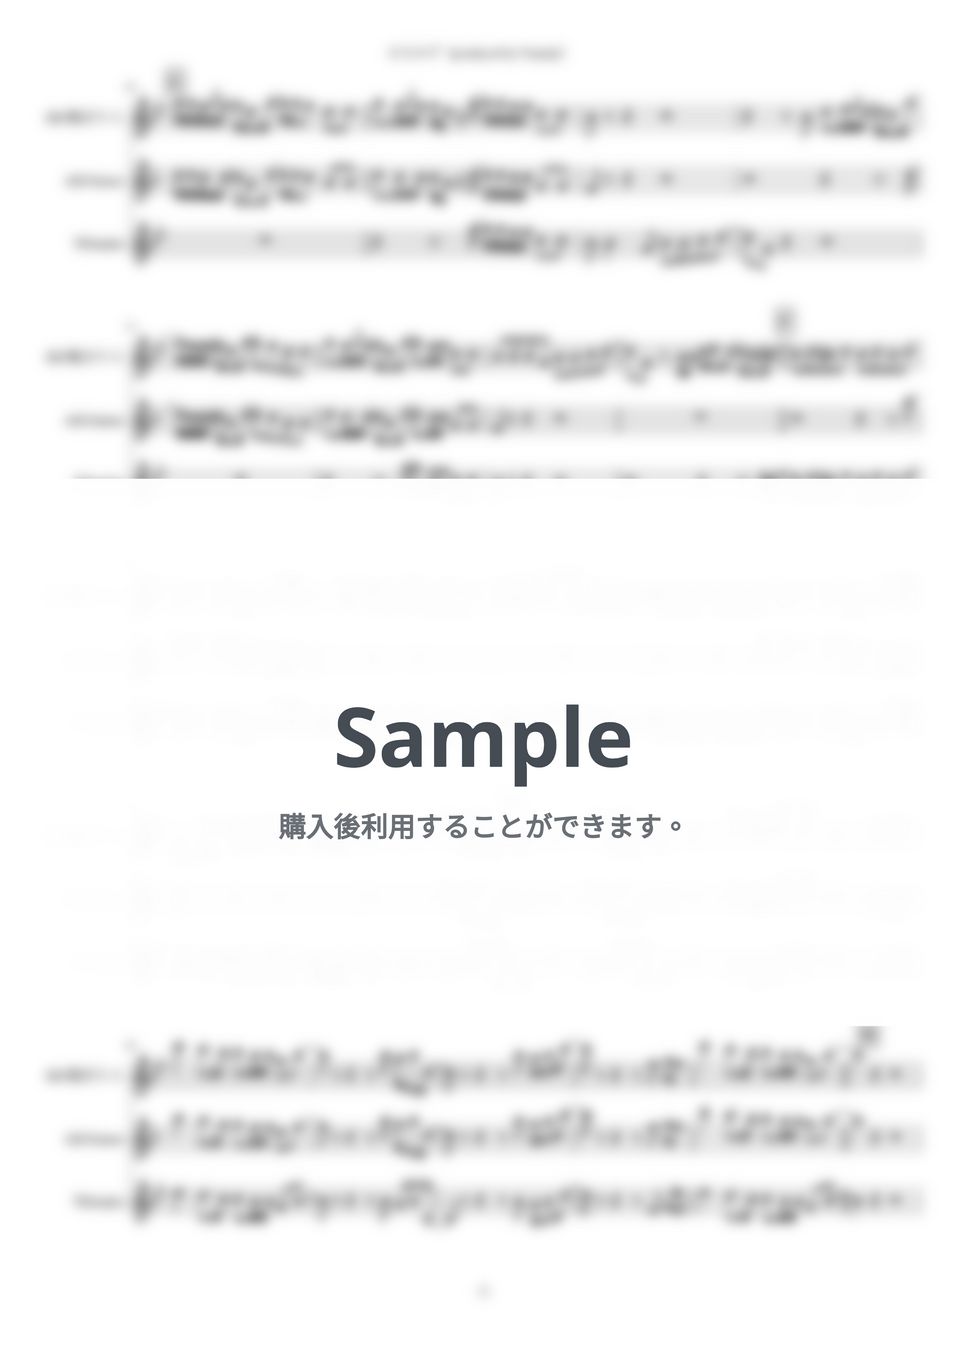 milet×Aimer×幾田りら - おもかげ (produced by Vaundy) (3パート・スコアセット) by inojunCH